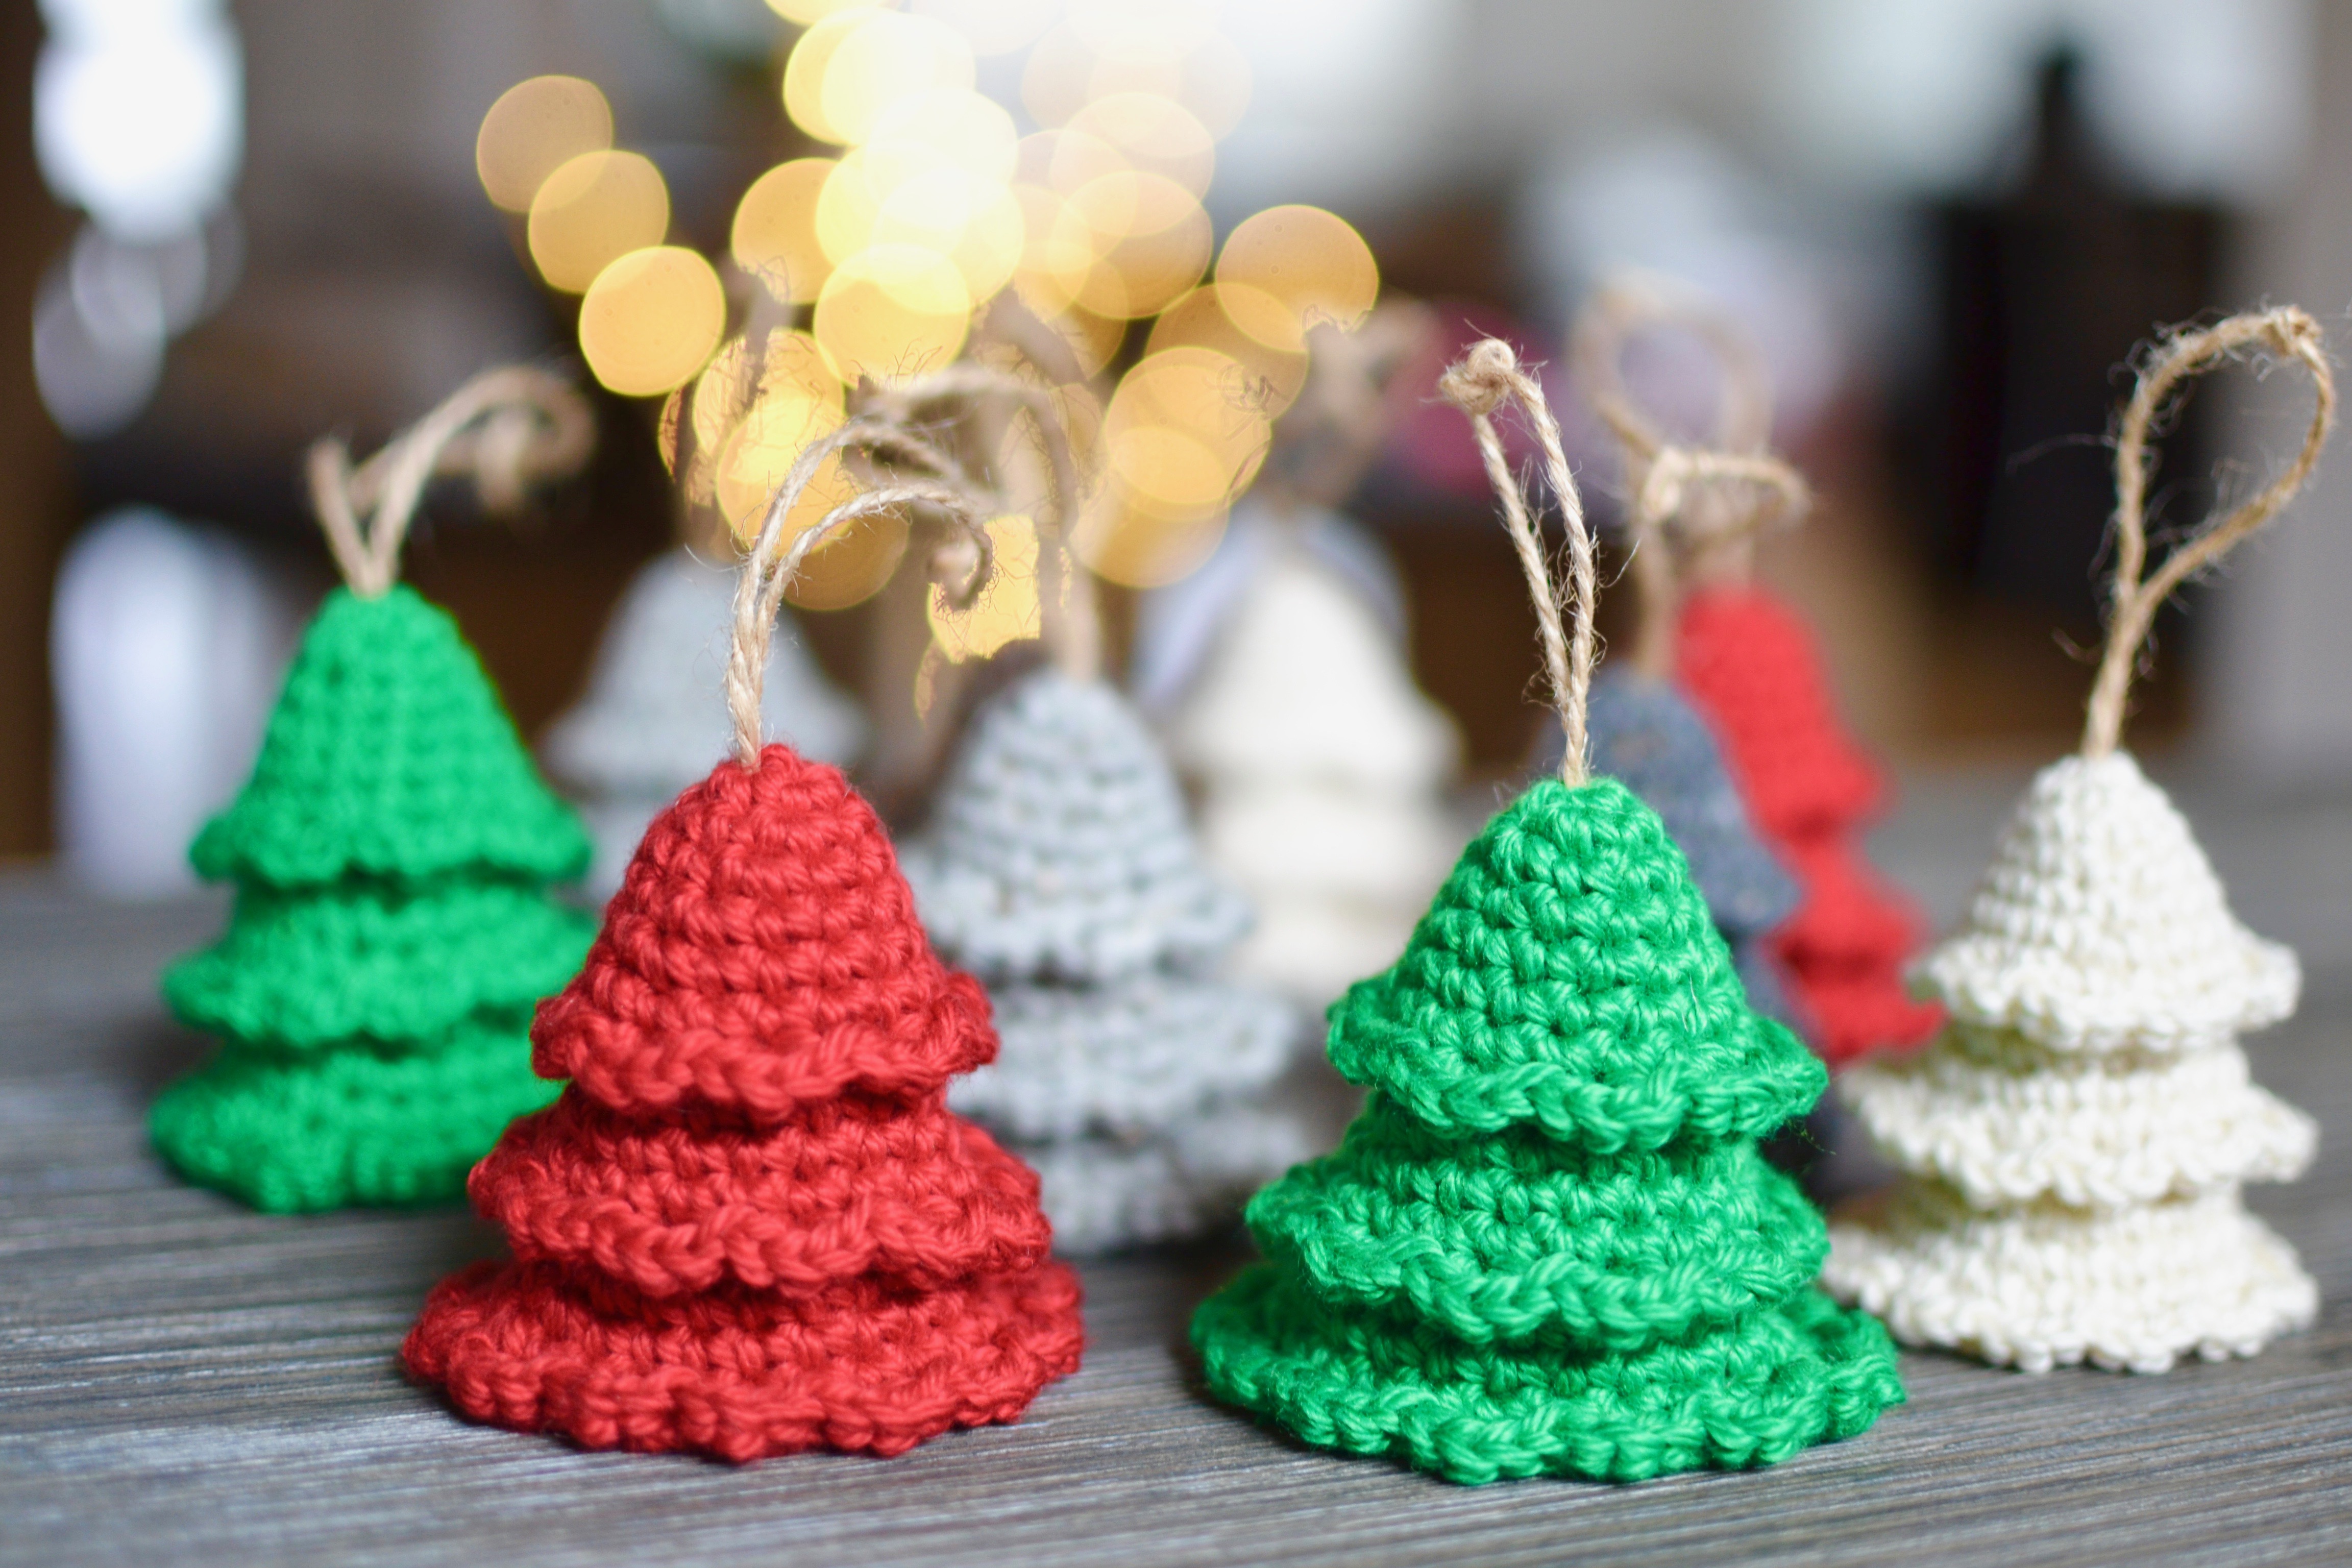 crochet-along-rustic-tree-ornaments-yarn-society